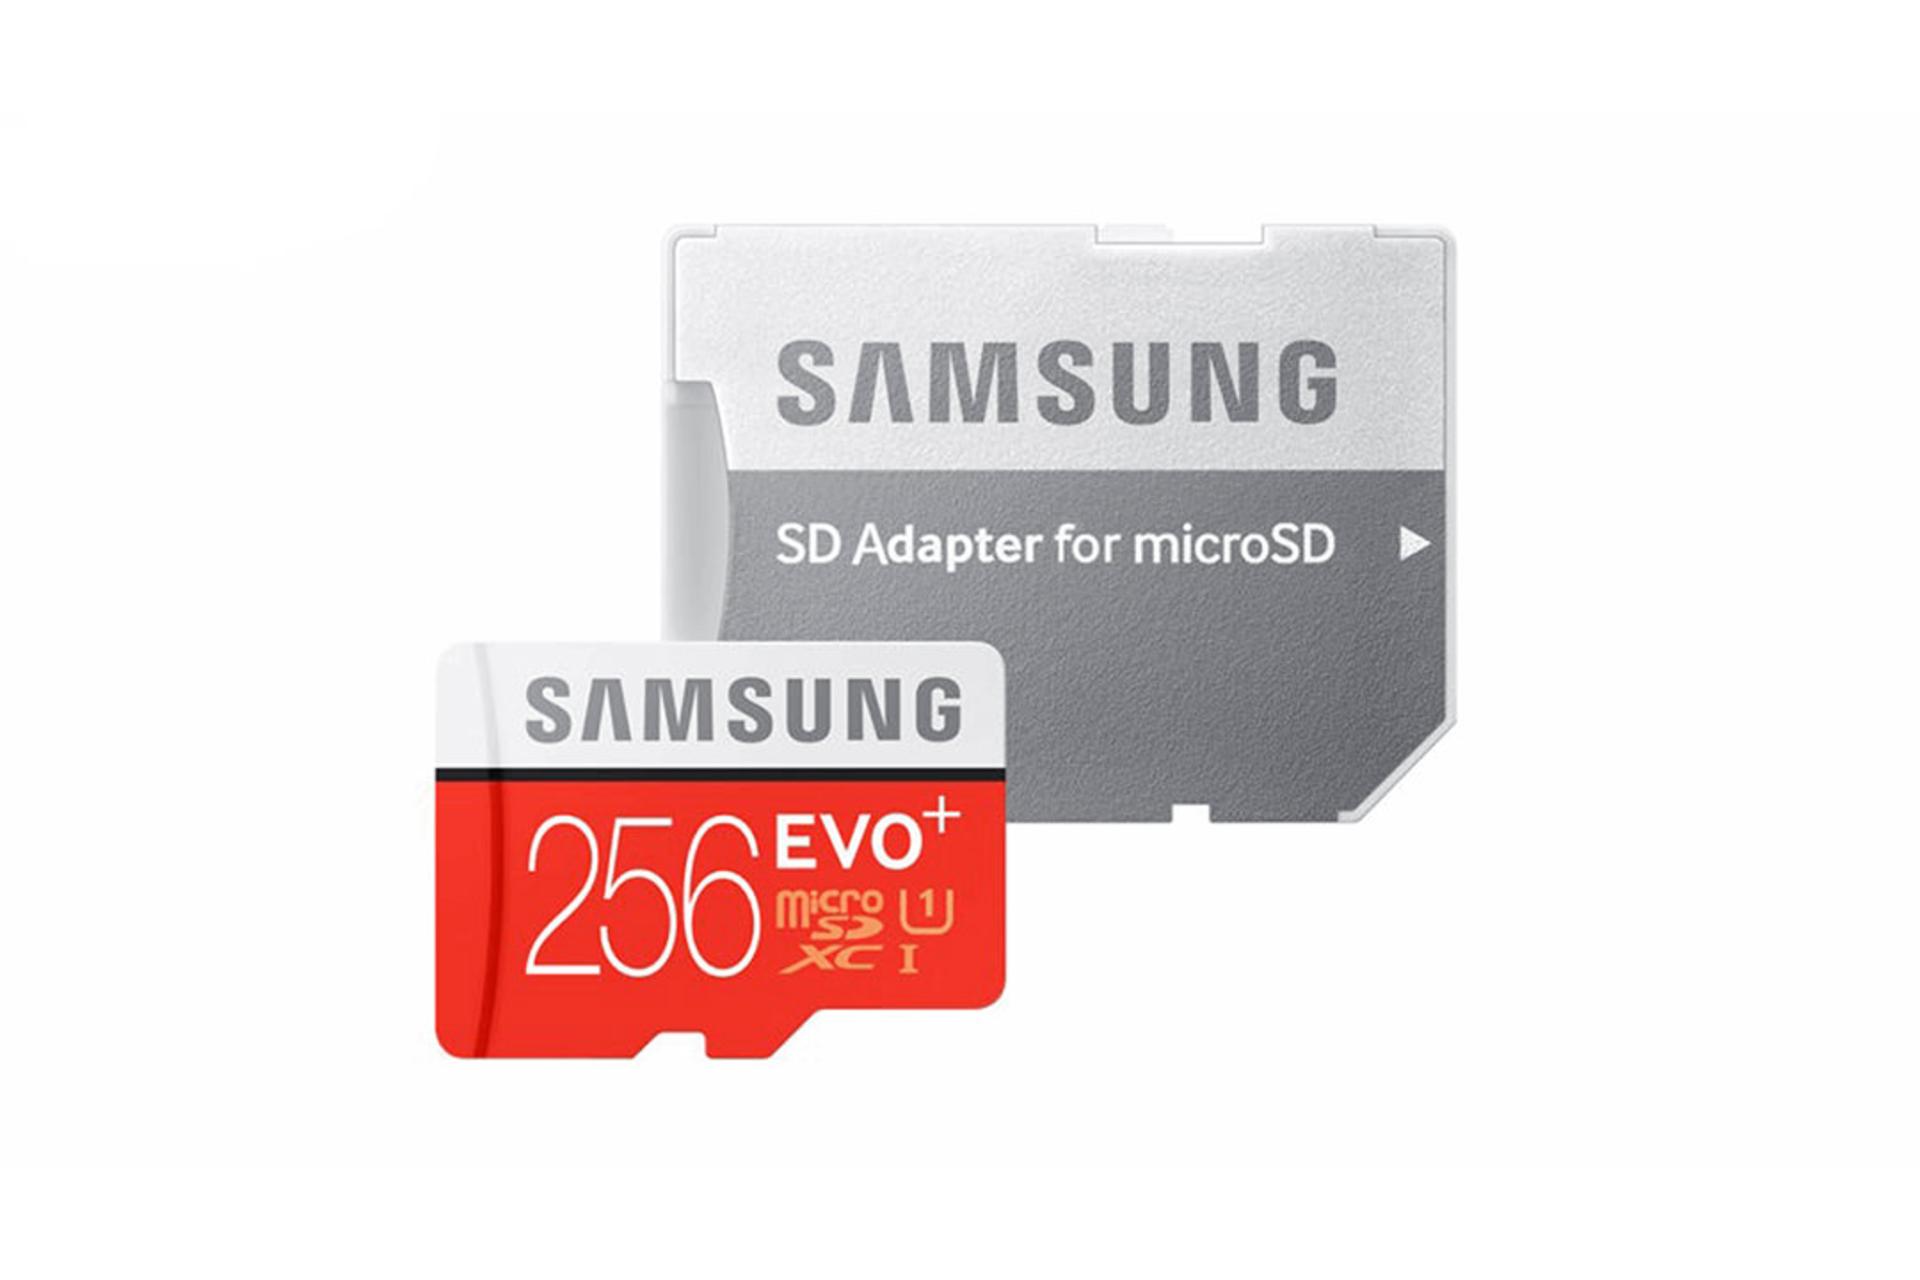 Samsung Evo Plus microSDXC Class 10 UHS-I U1 256GB